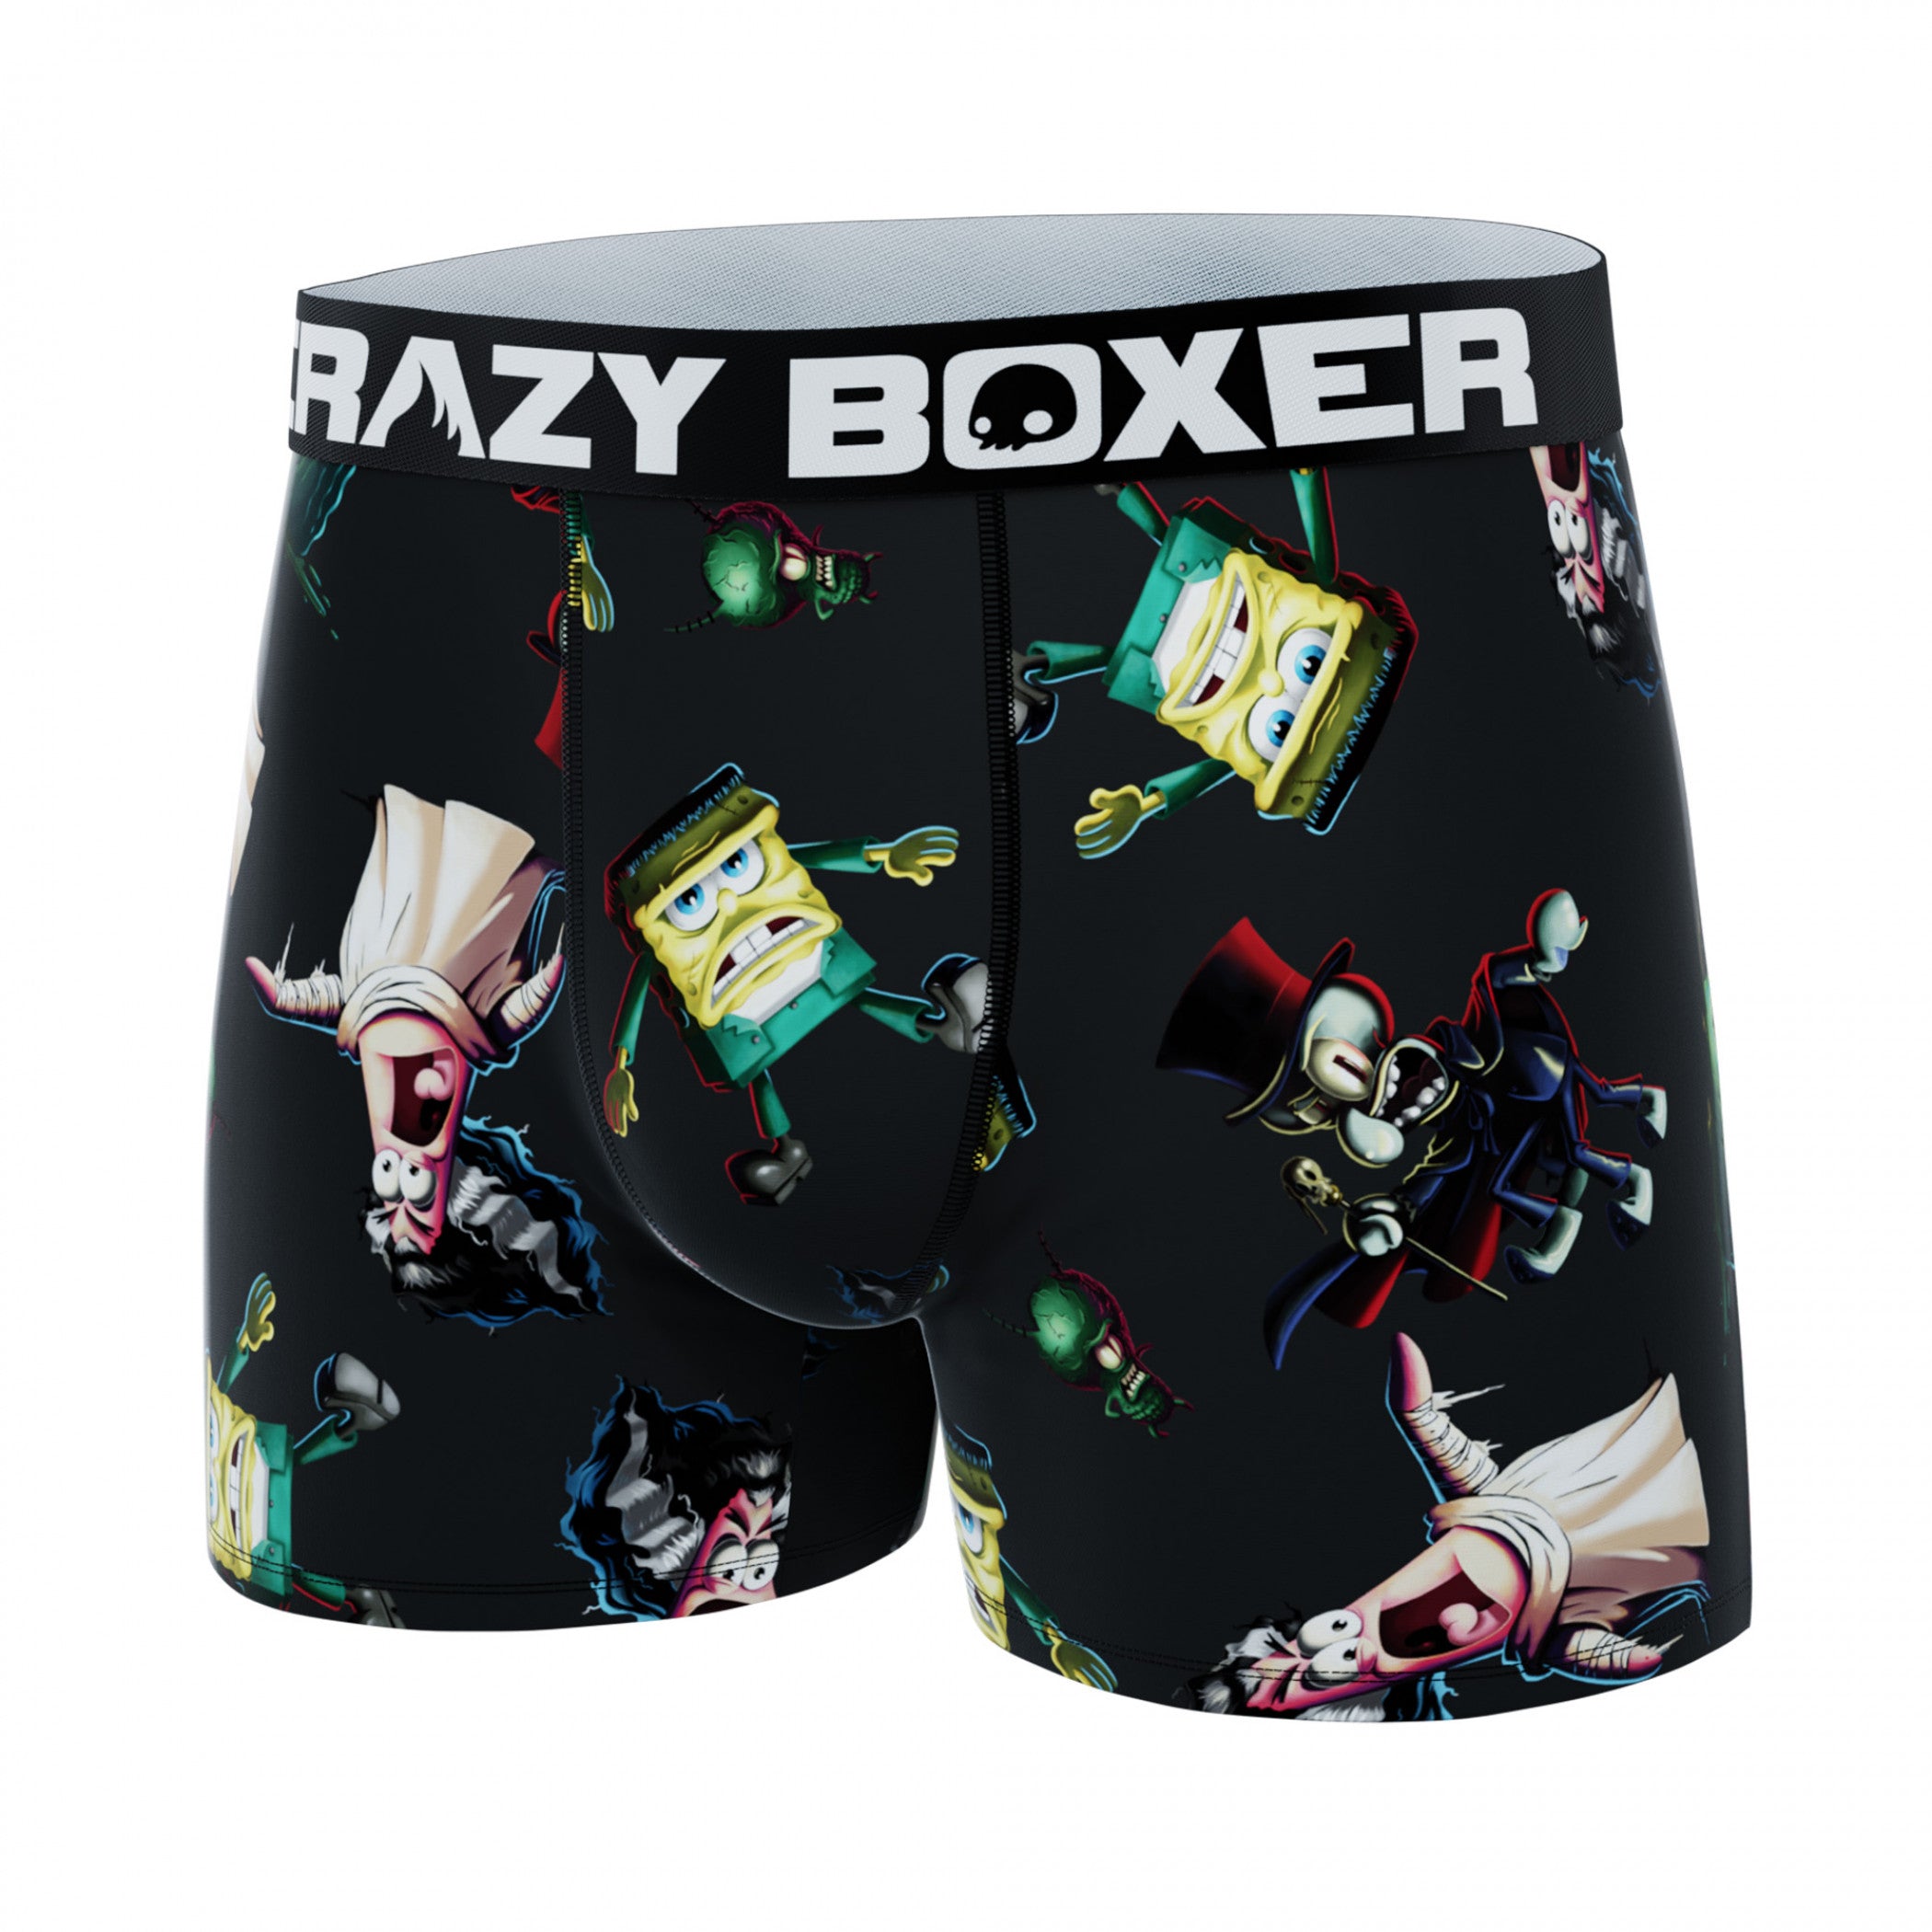 title:Crazy Boxer SpongeBob SquarePants Halloween Boxers in Novelty Packaging;color:Multi-Color